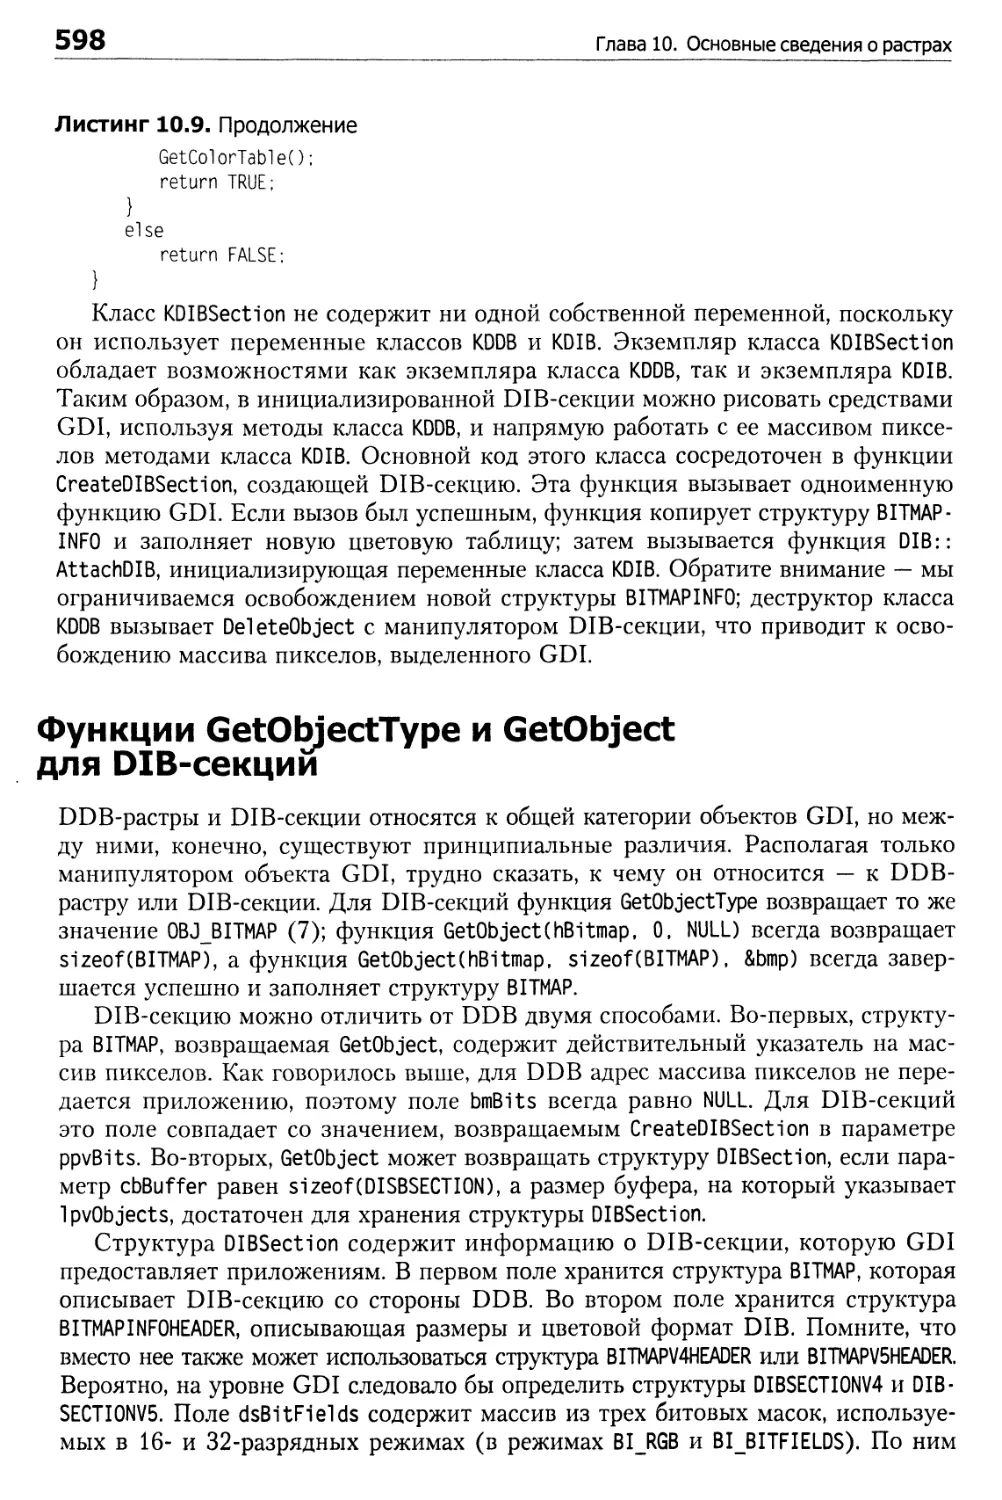 Функции GetObjectType и GetObject для DIB-секций